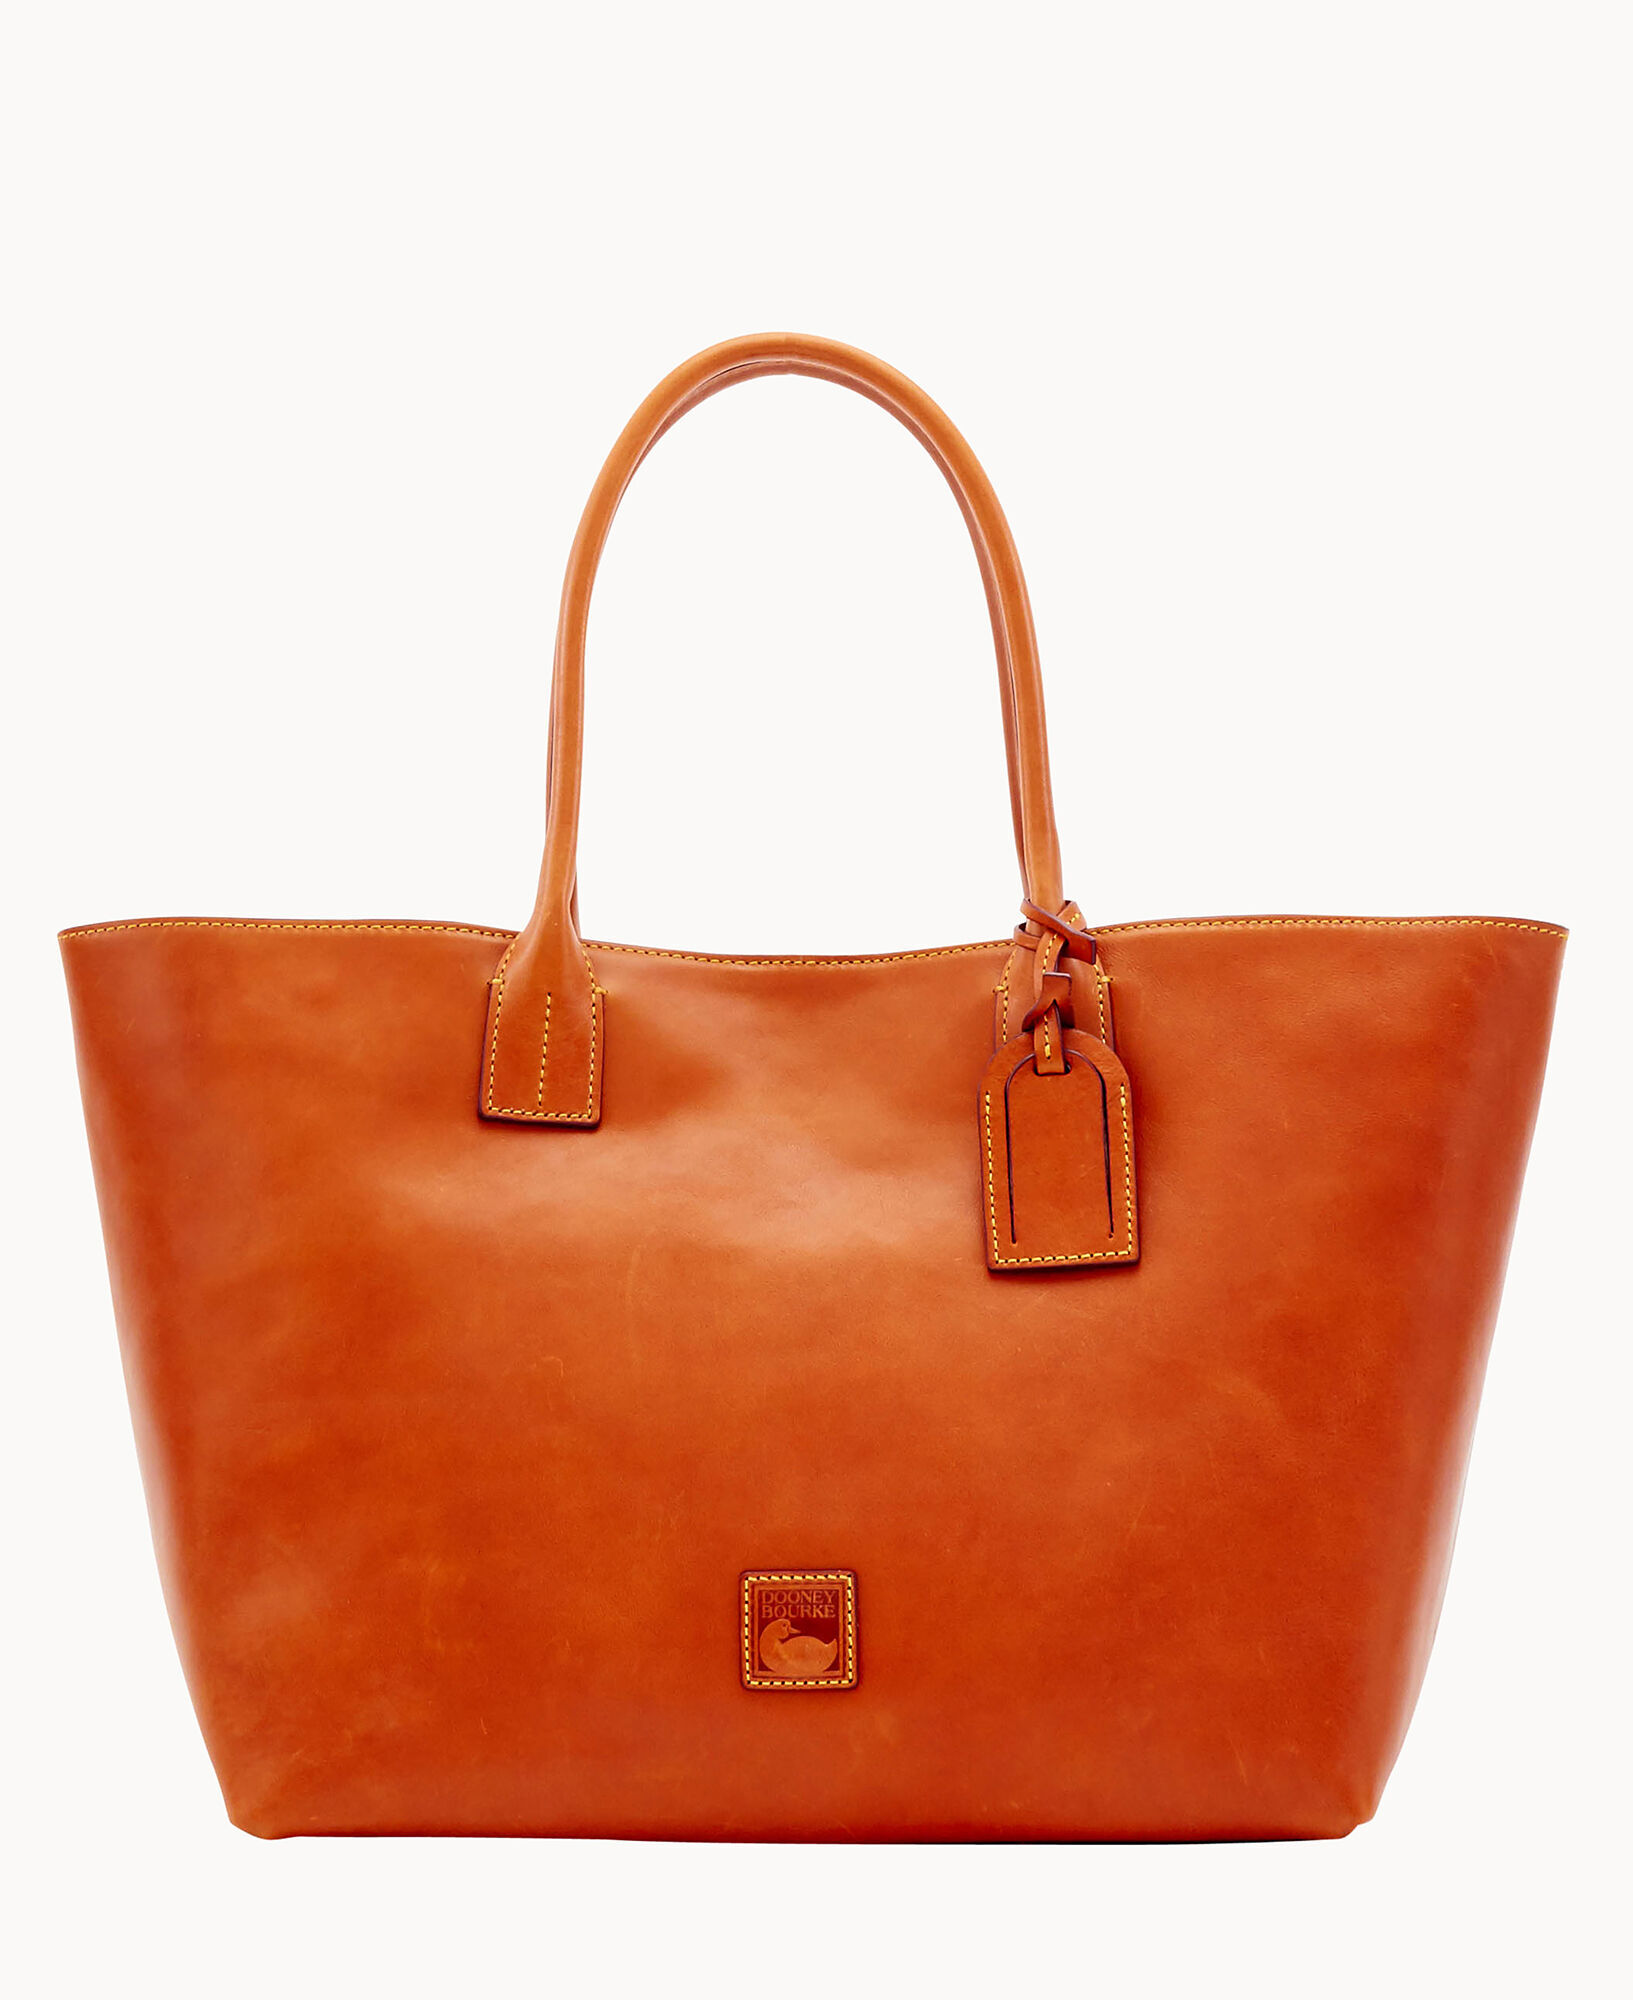 Letter Graphic Fett Handbag, Solid Color Shopping Bag, Simple Gift